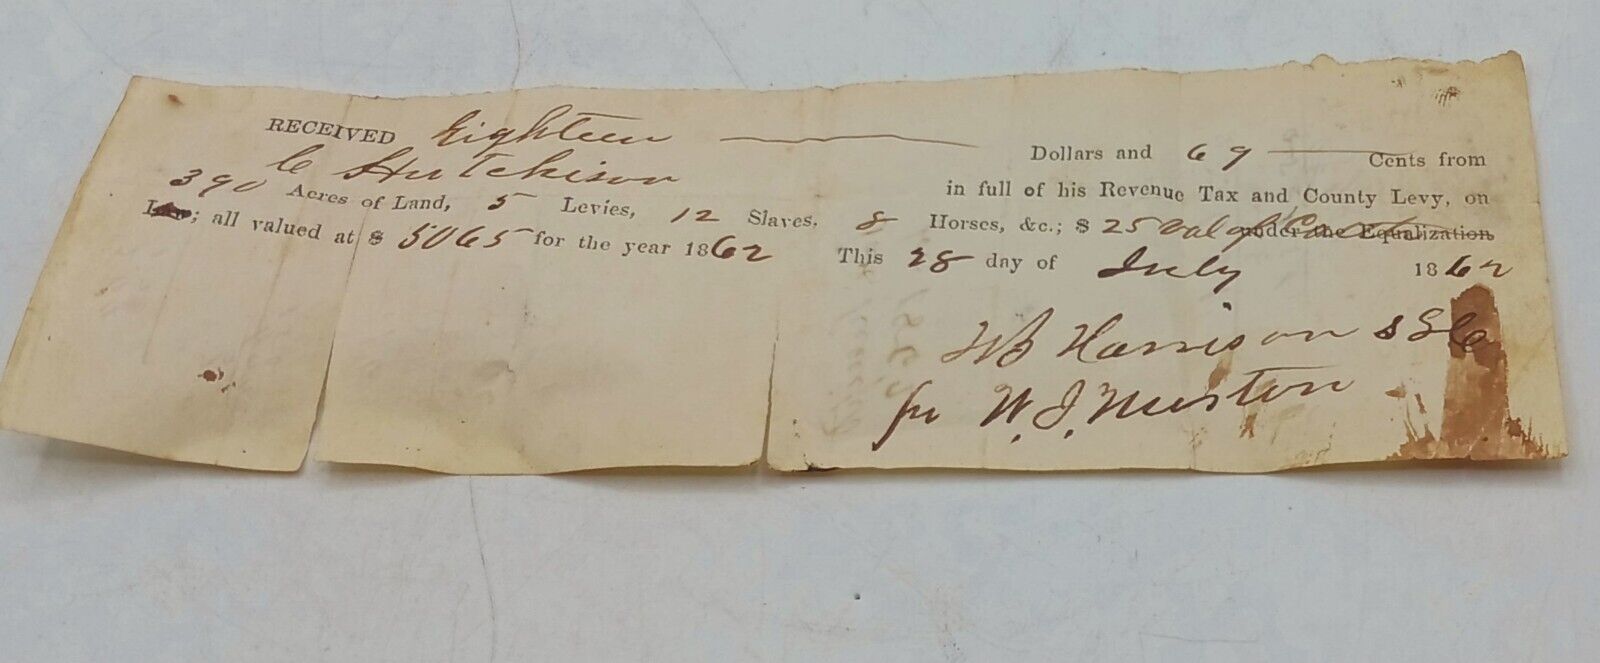 Antique July 1862 Receipt 390 Acres Of Land 5 Levies 12 Slaves & 8 Horses $50.65